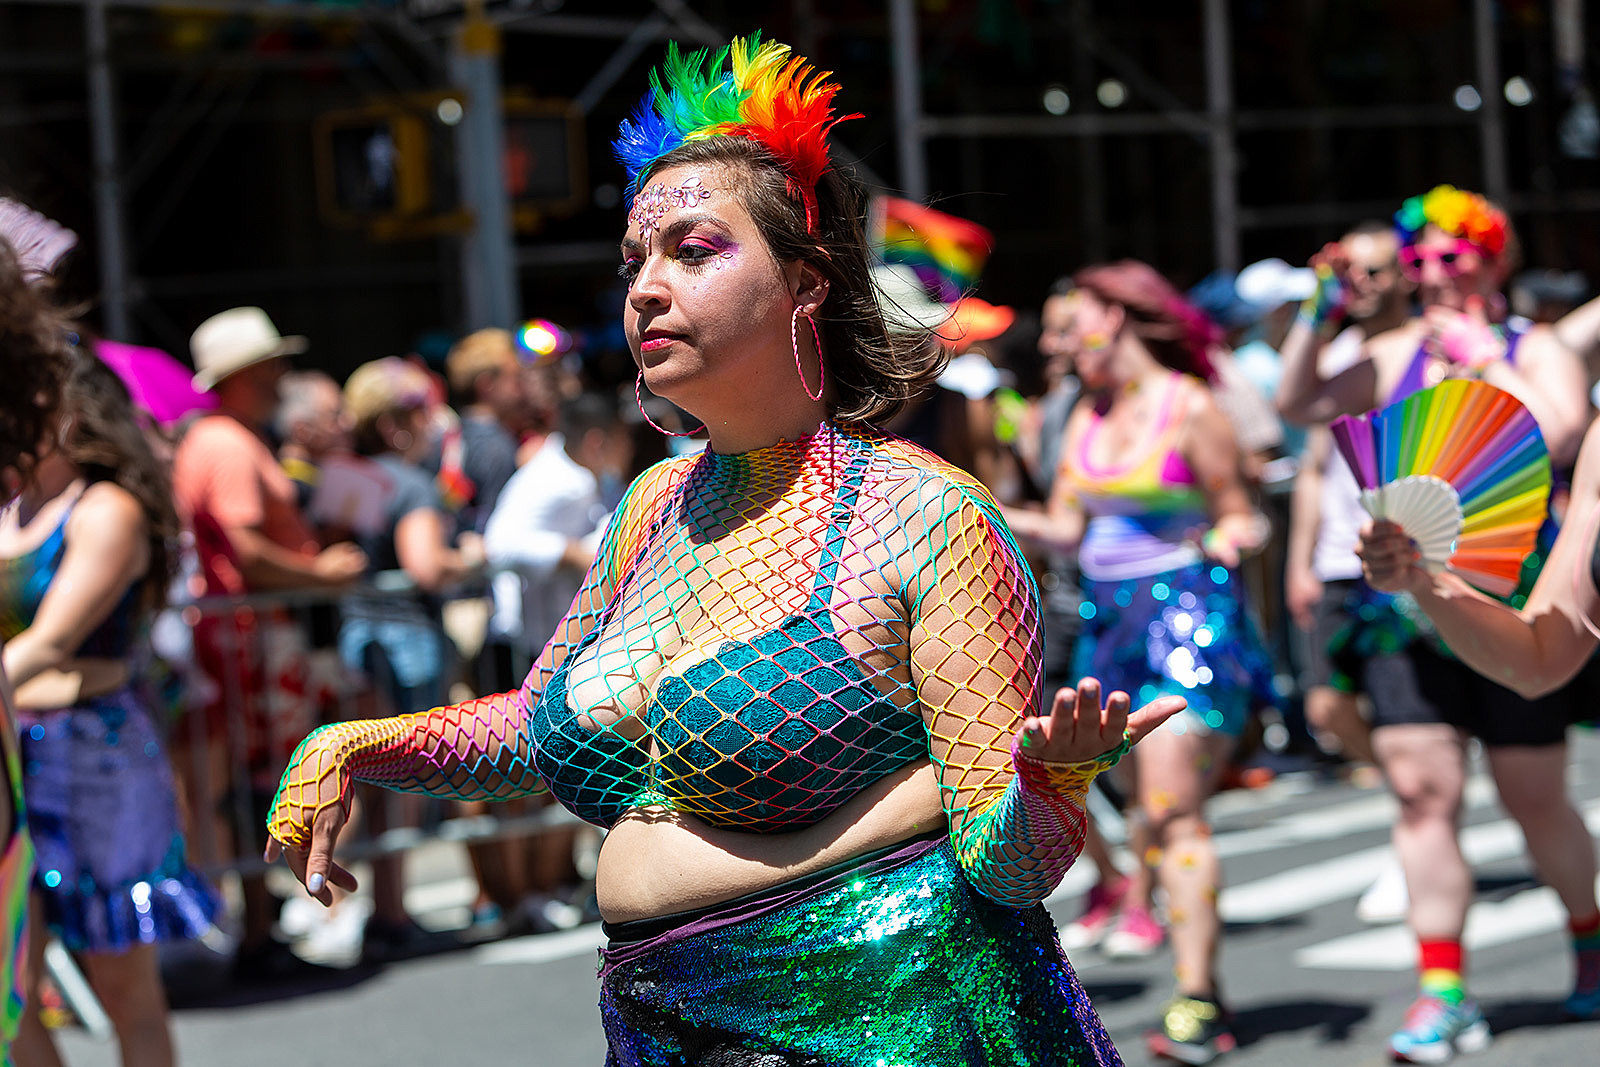 NYC Pride March 2022